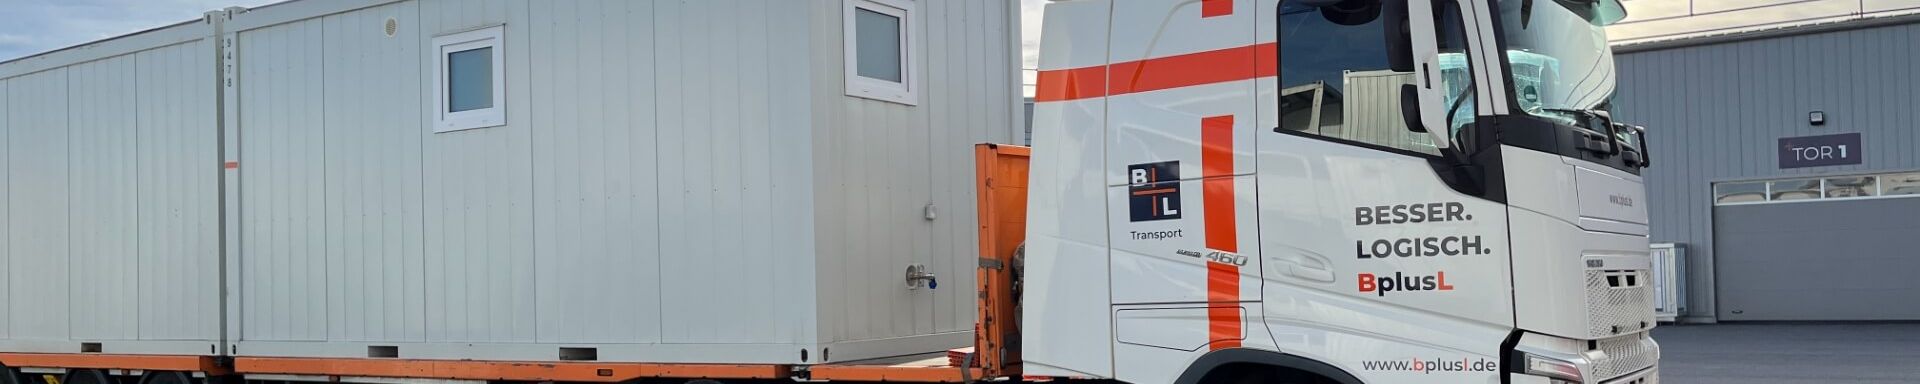 BPLUSL Mobile Toiletten Container Vermietung